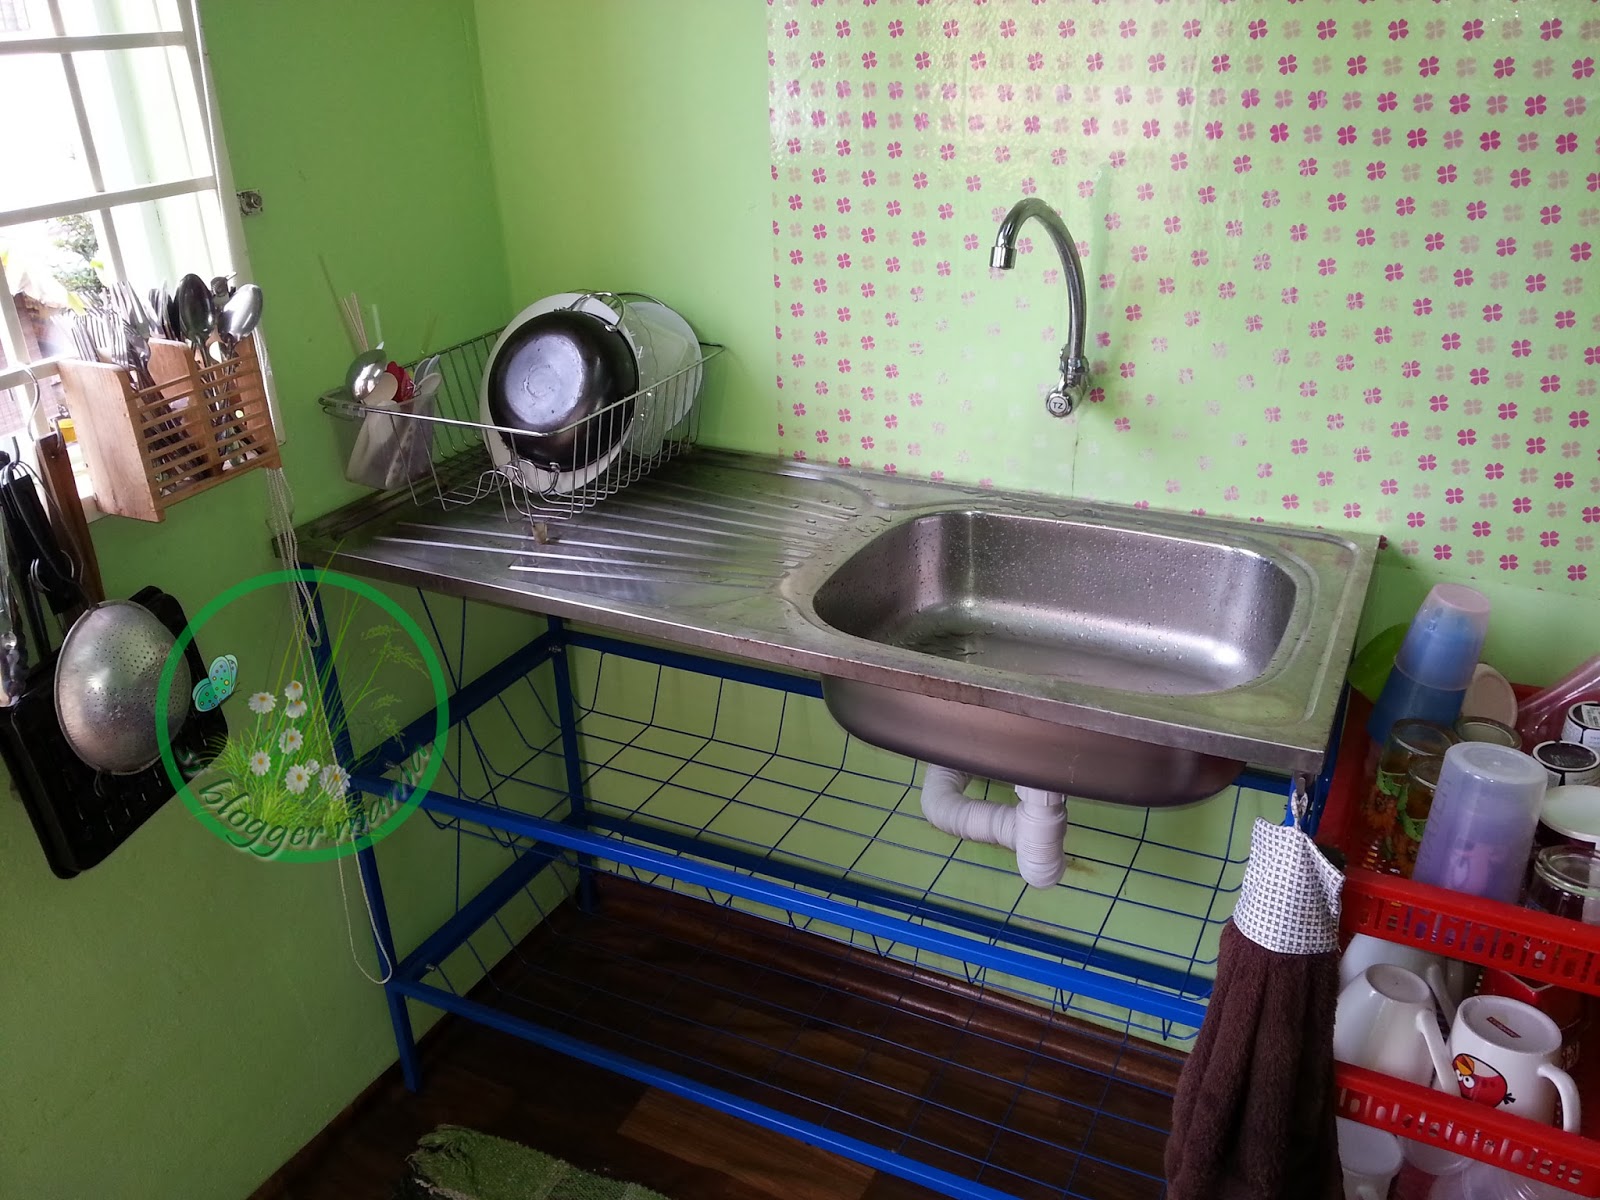 Sinki Dapur Murah Malaysia Desainrumahid com